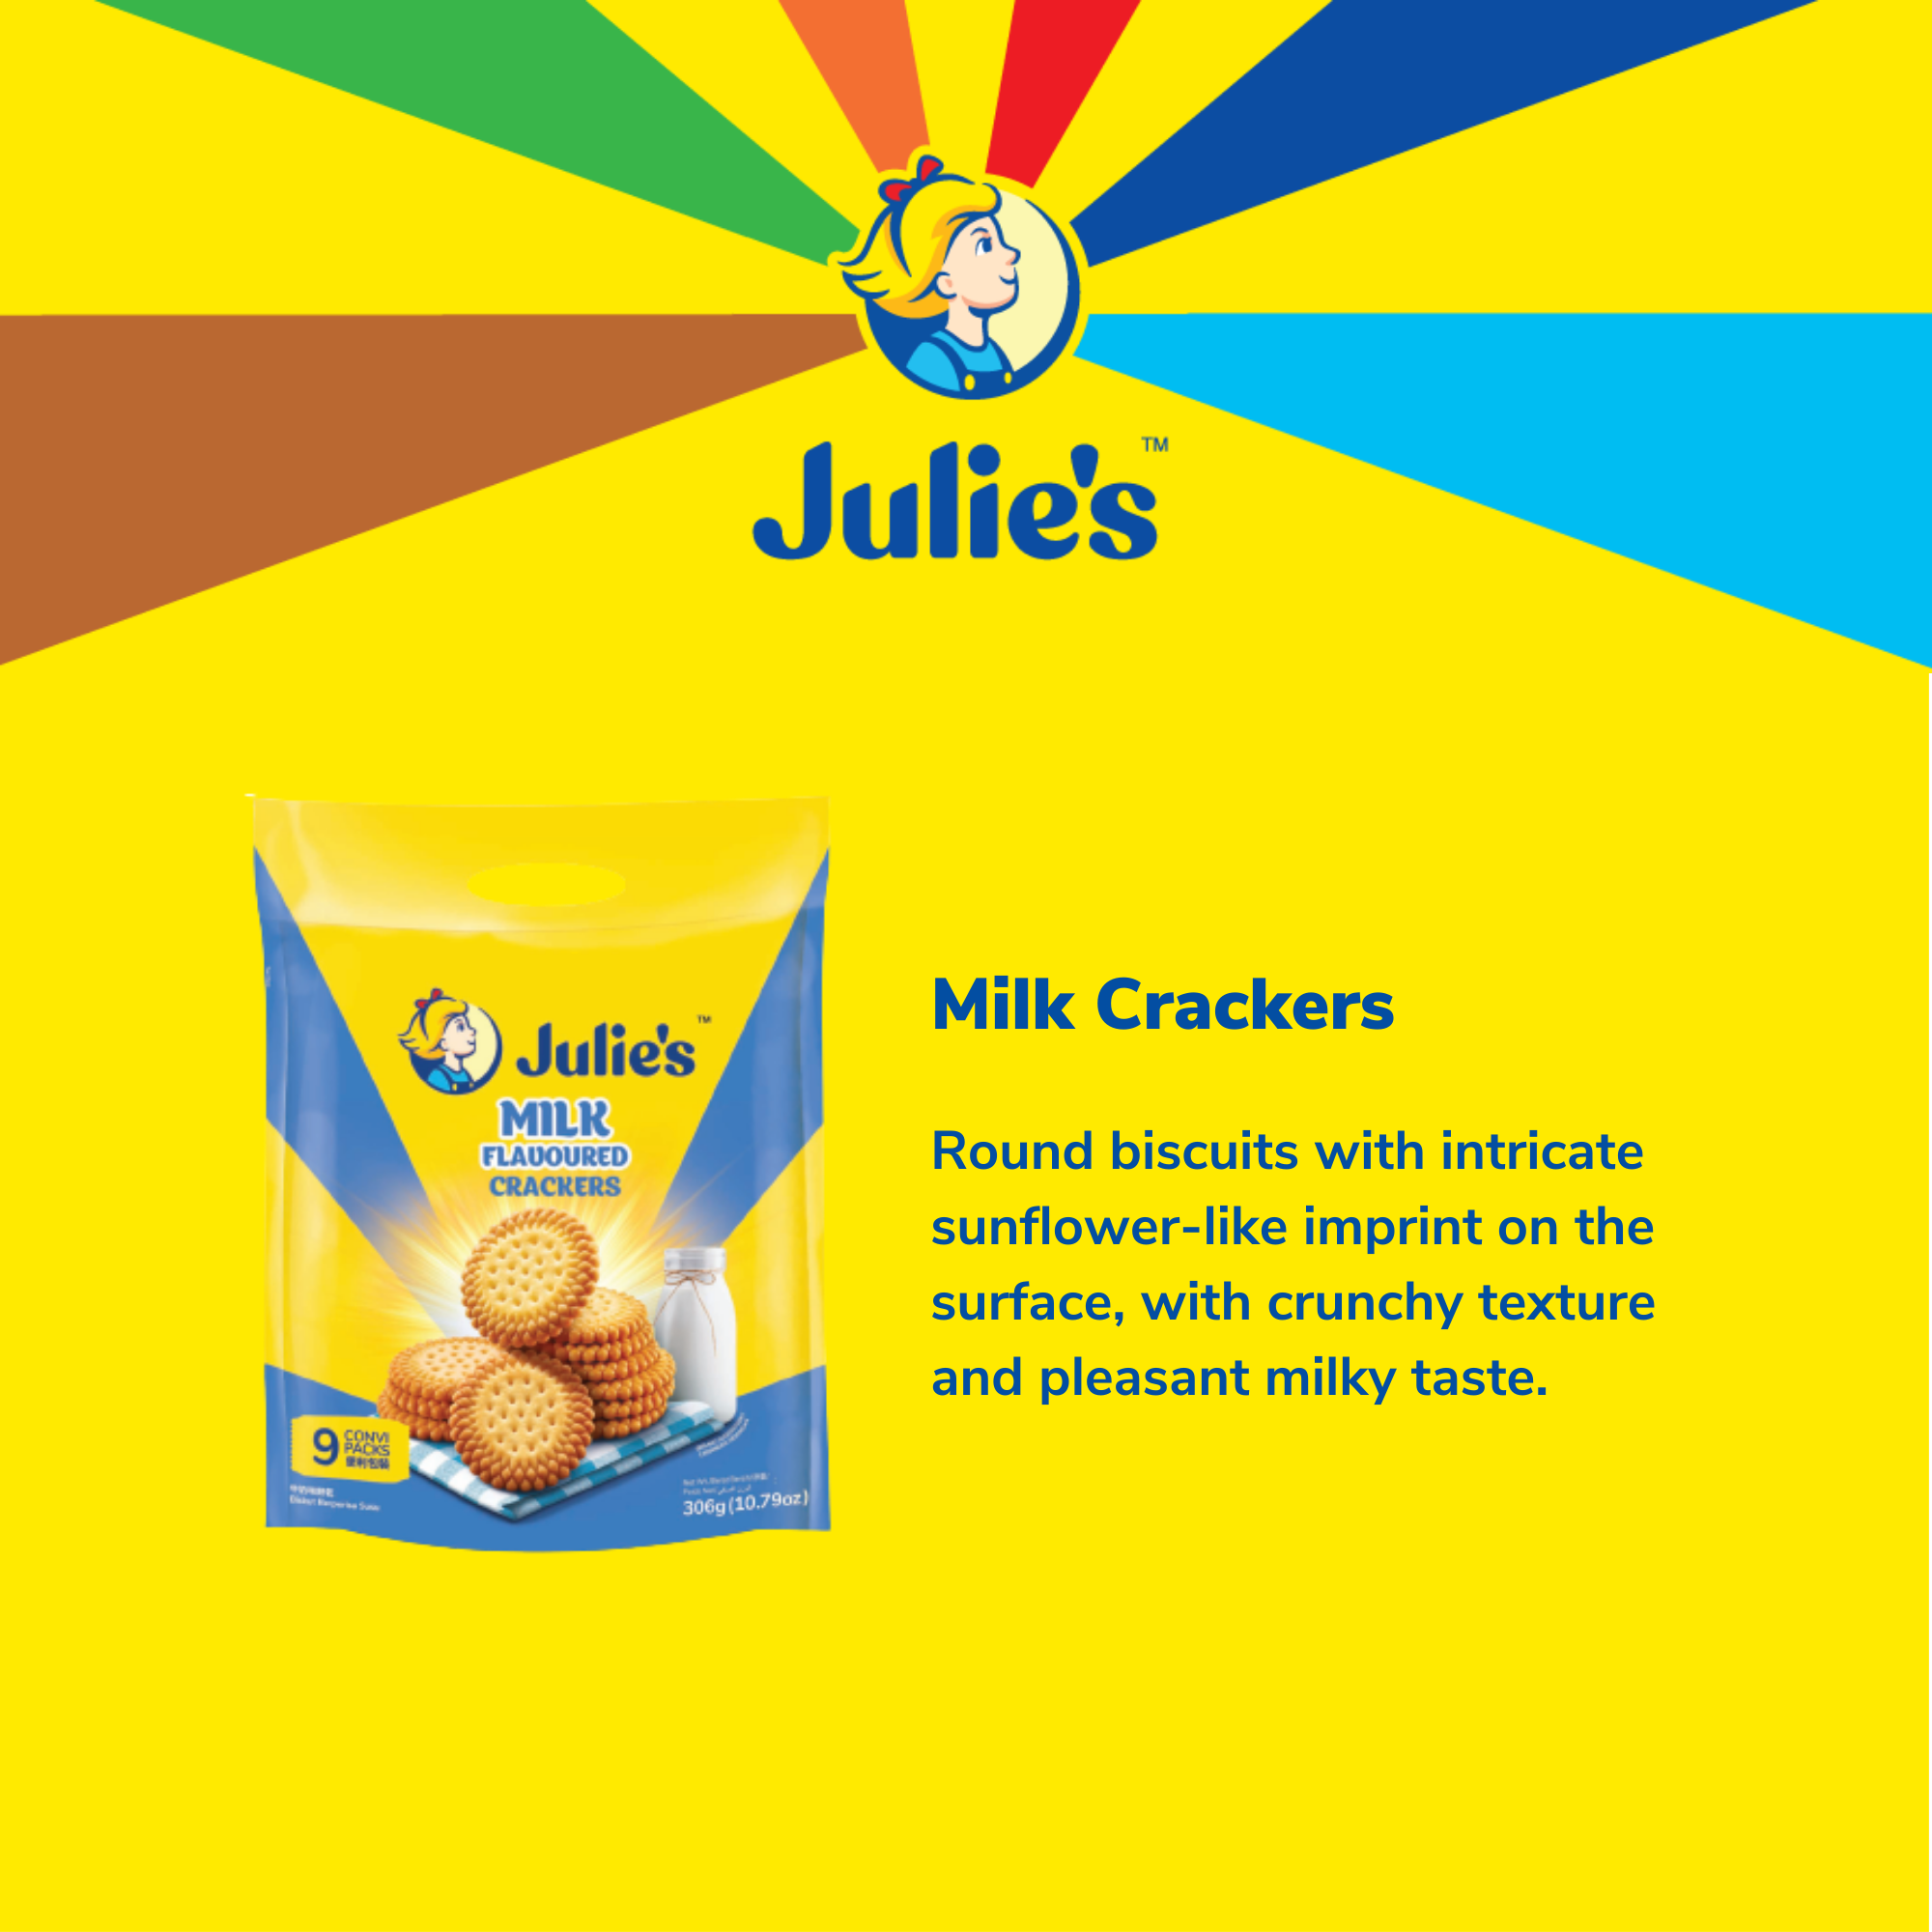 Julie's Milk Crackers 306g x 3 packs